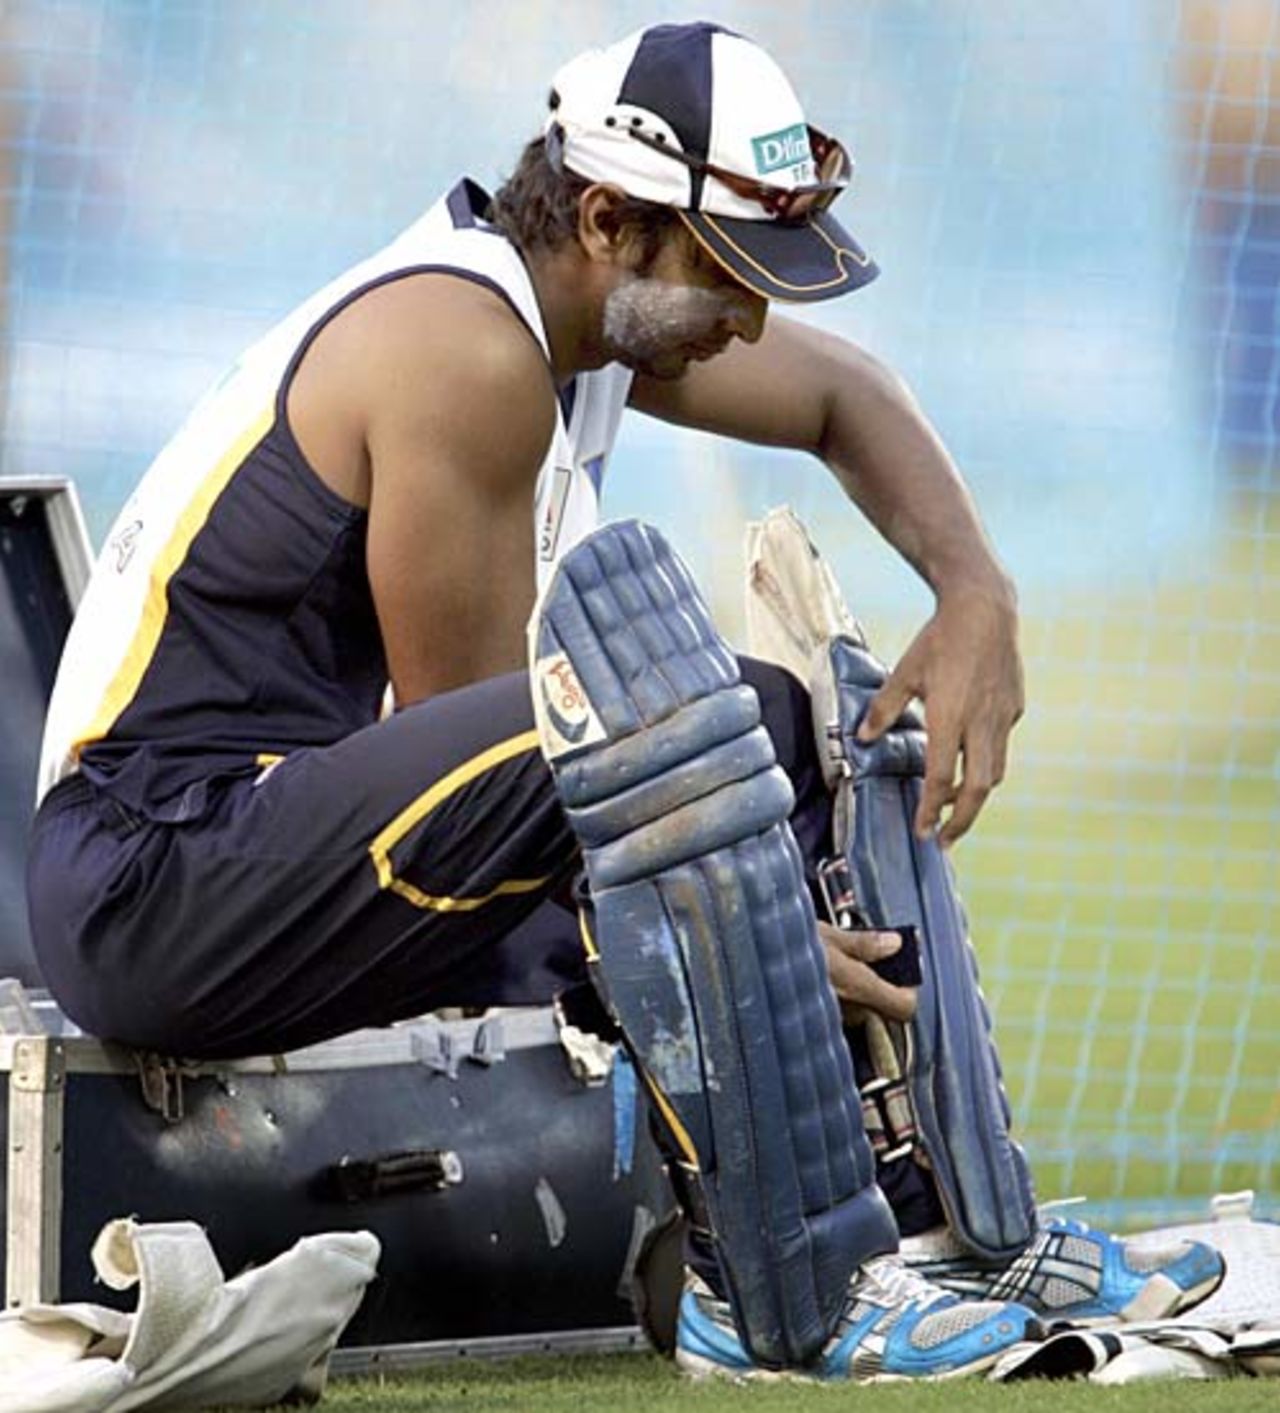 Kumar Sangakkara straps on his pads ahead of a net session, Mumbai, October 19, 2006